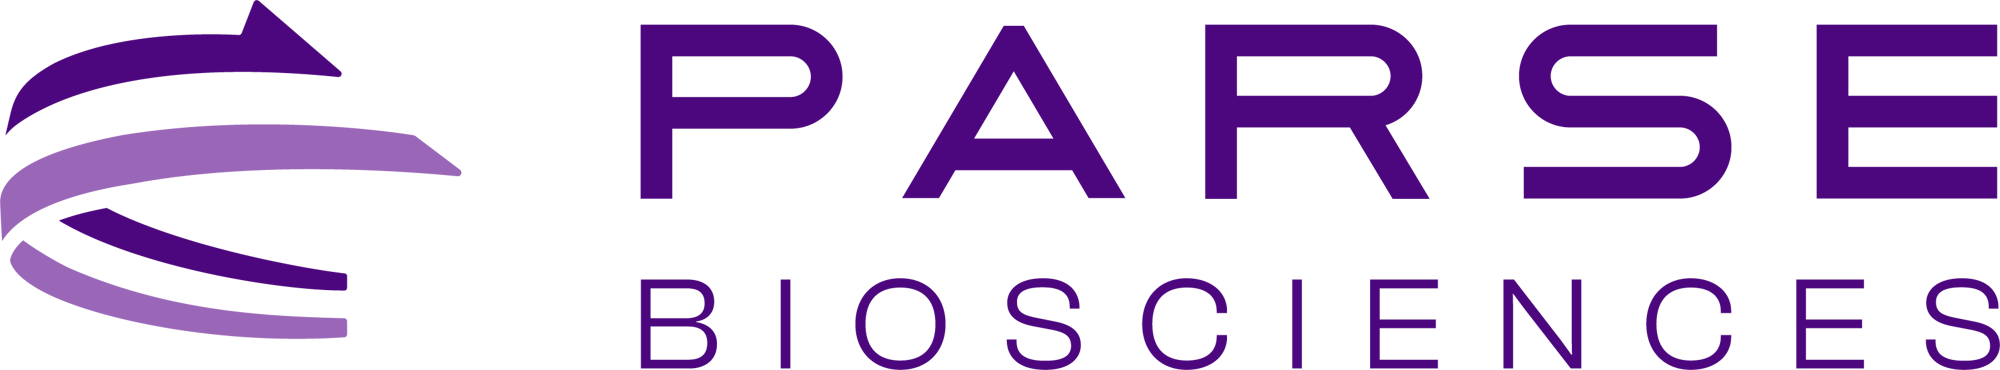 Parse_Logo_rgb